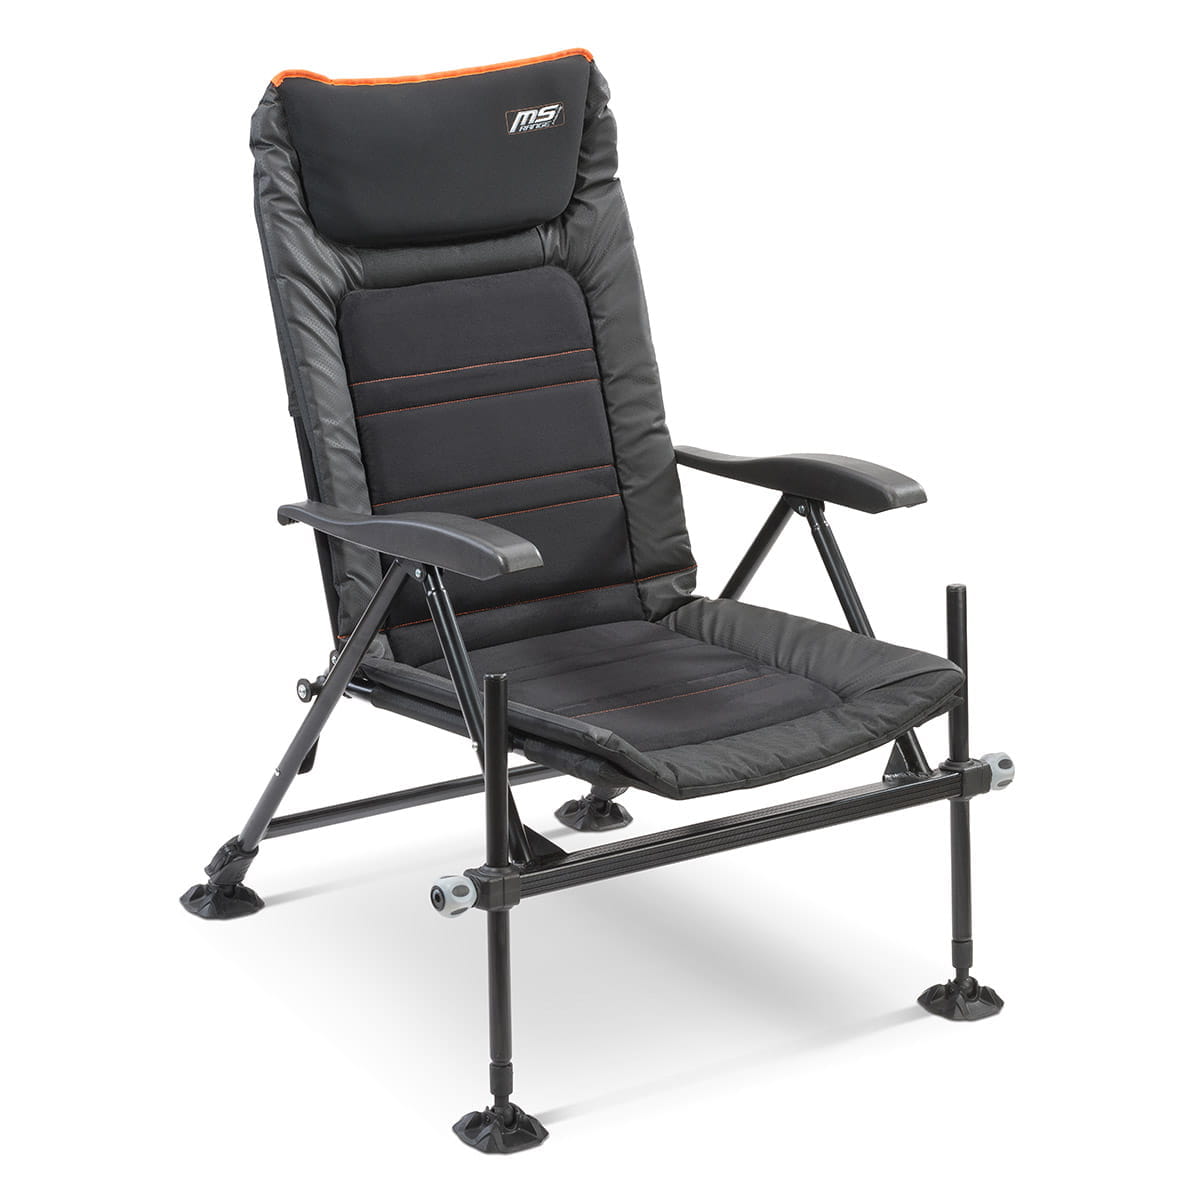 MS Range Feeder Chair II